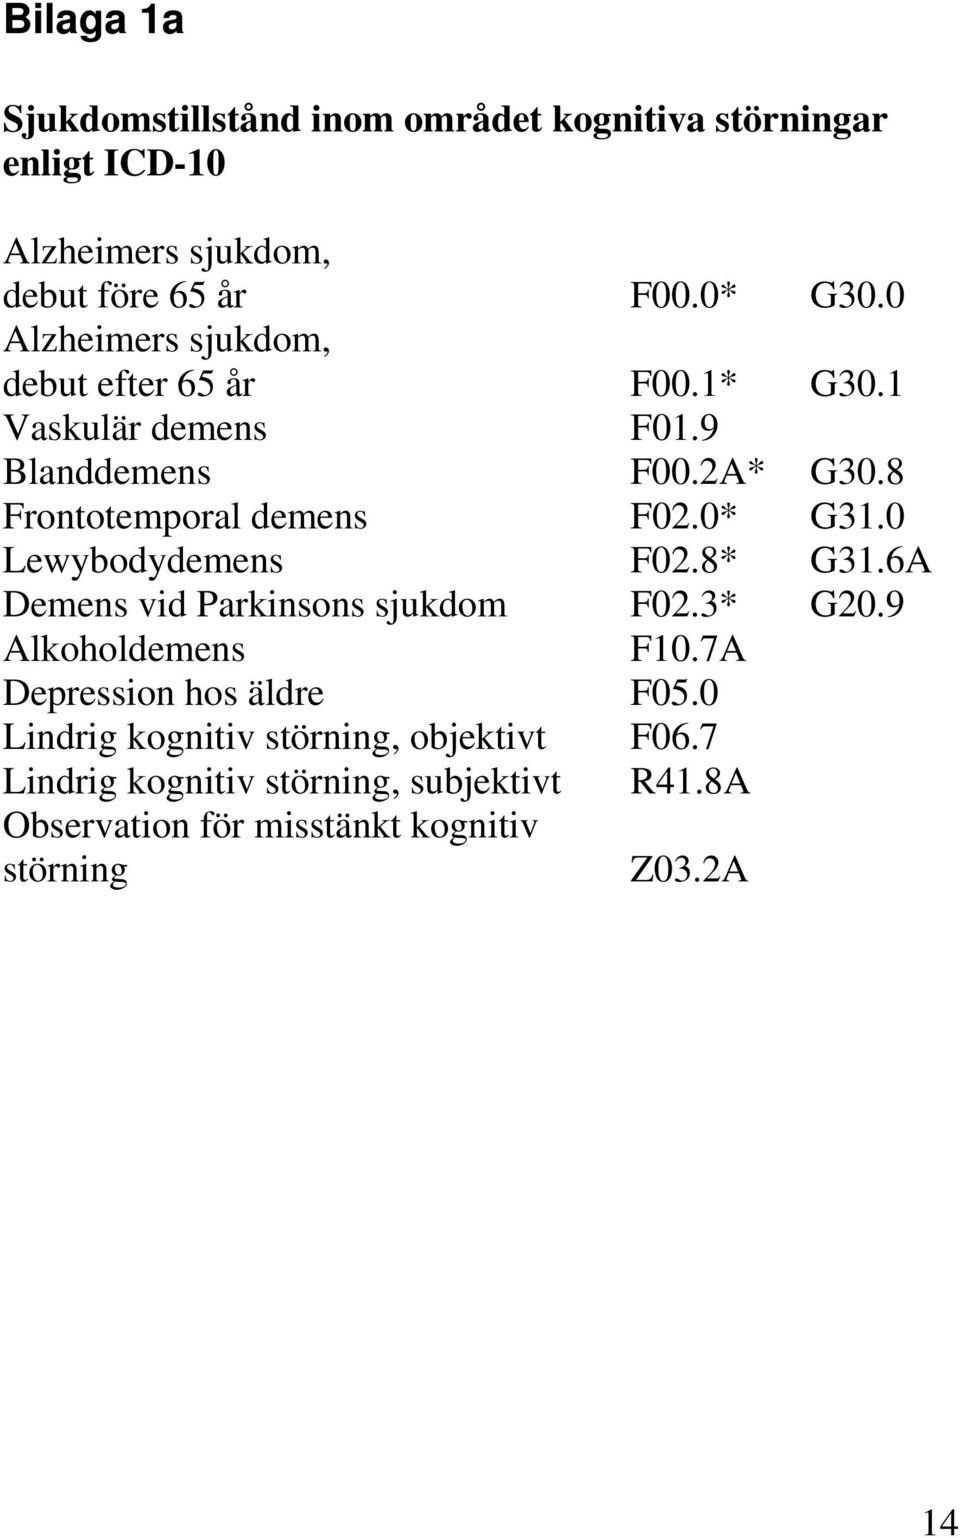 0* G31.0 Lewybodydemens F02.8* G31.6A Demens vid Parkinsons sjukdom F02.3* G20.9 Alkoholdemens F10.7A Depression hos äldre F05.